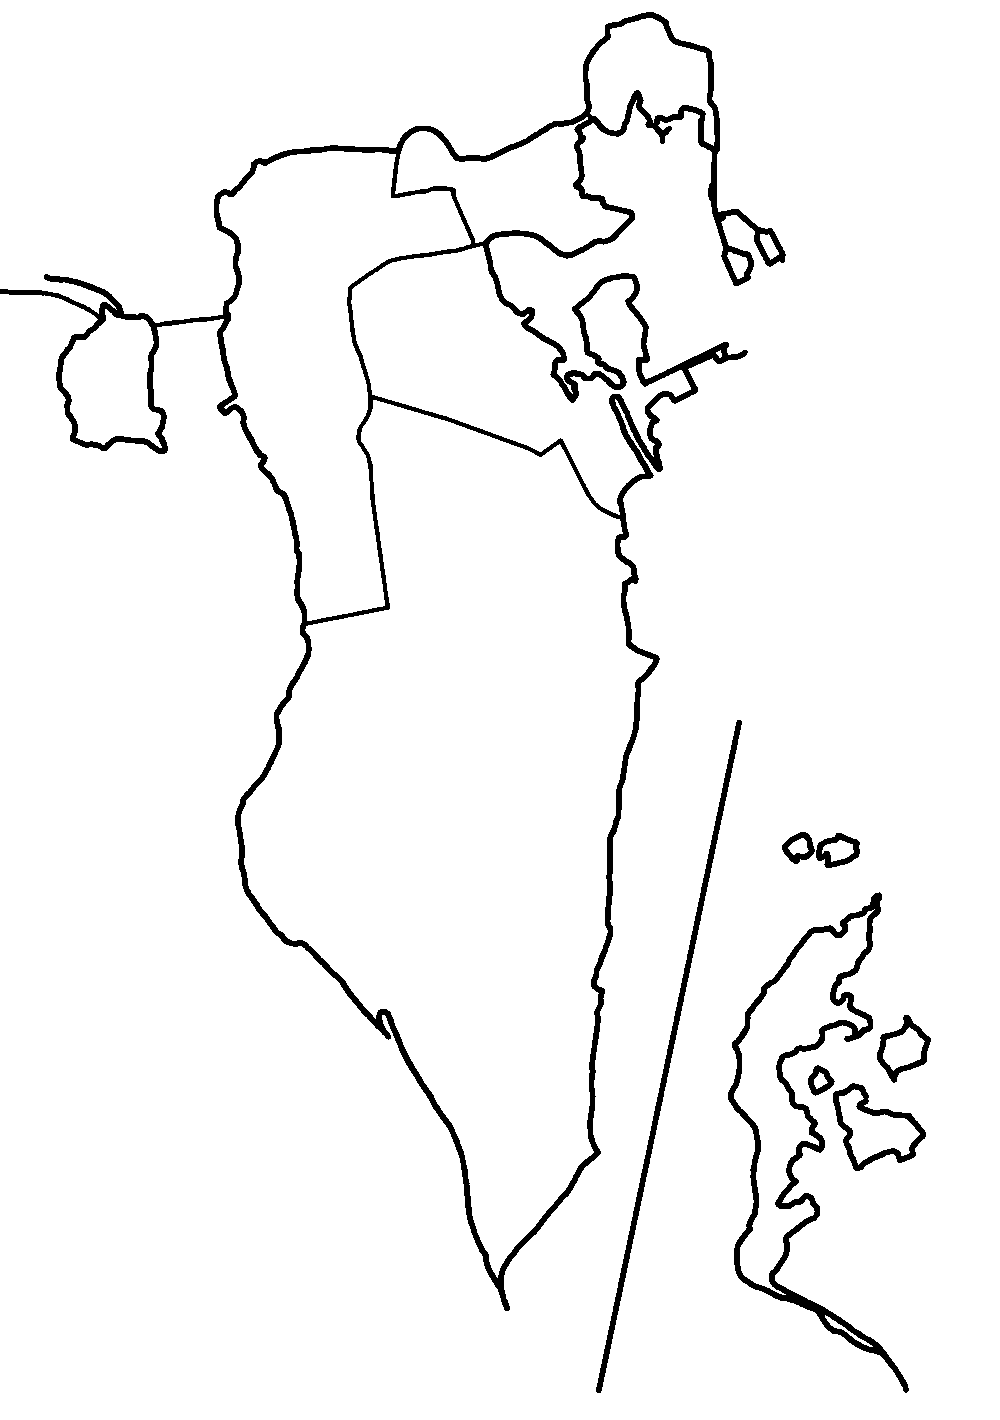 Bahrain Map PNG - 159328